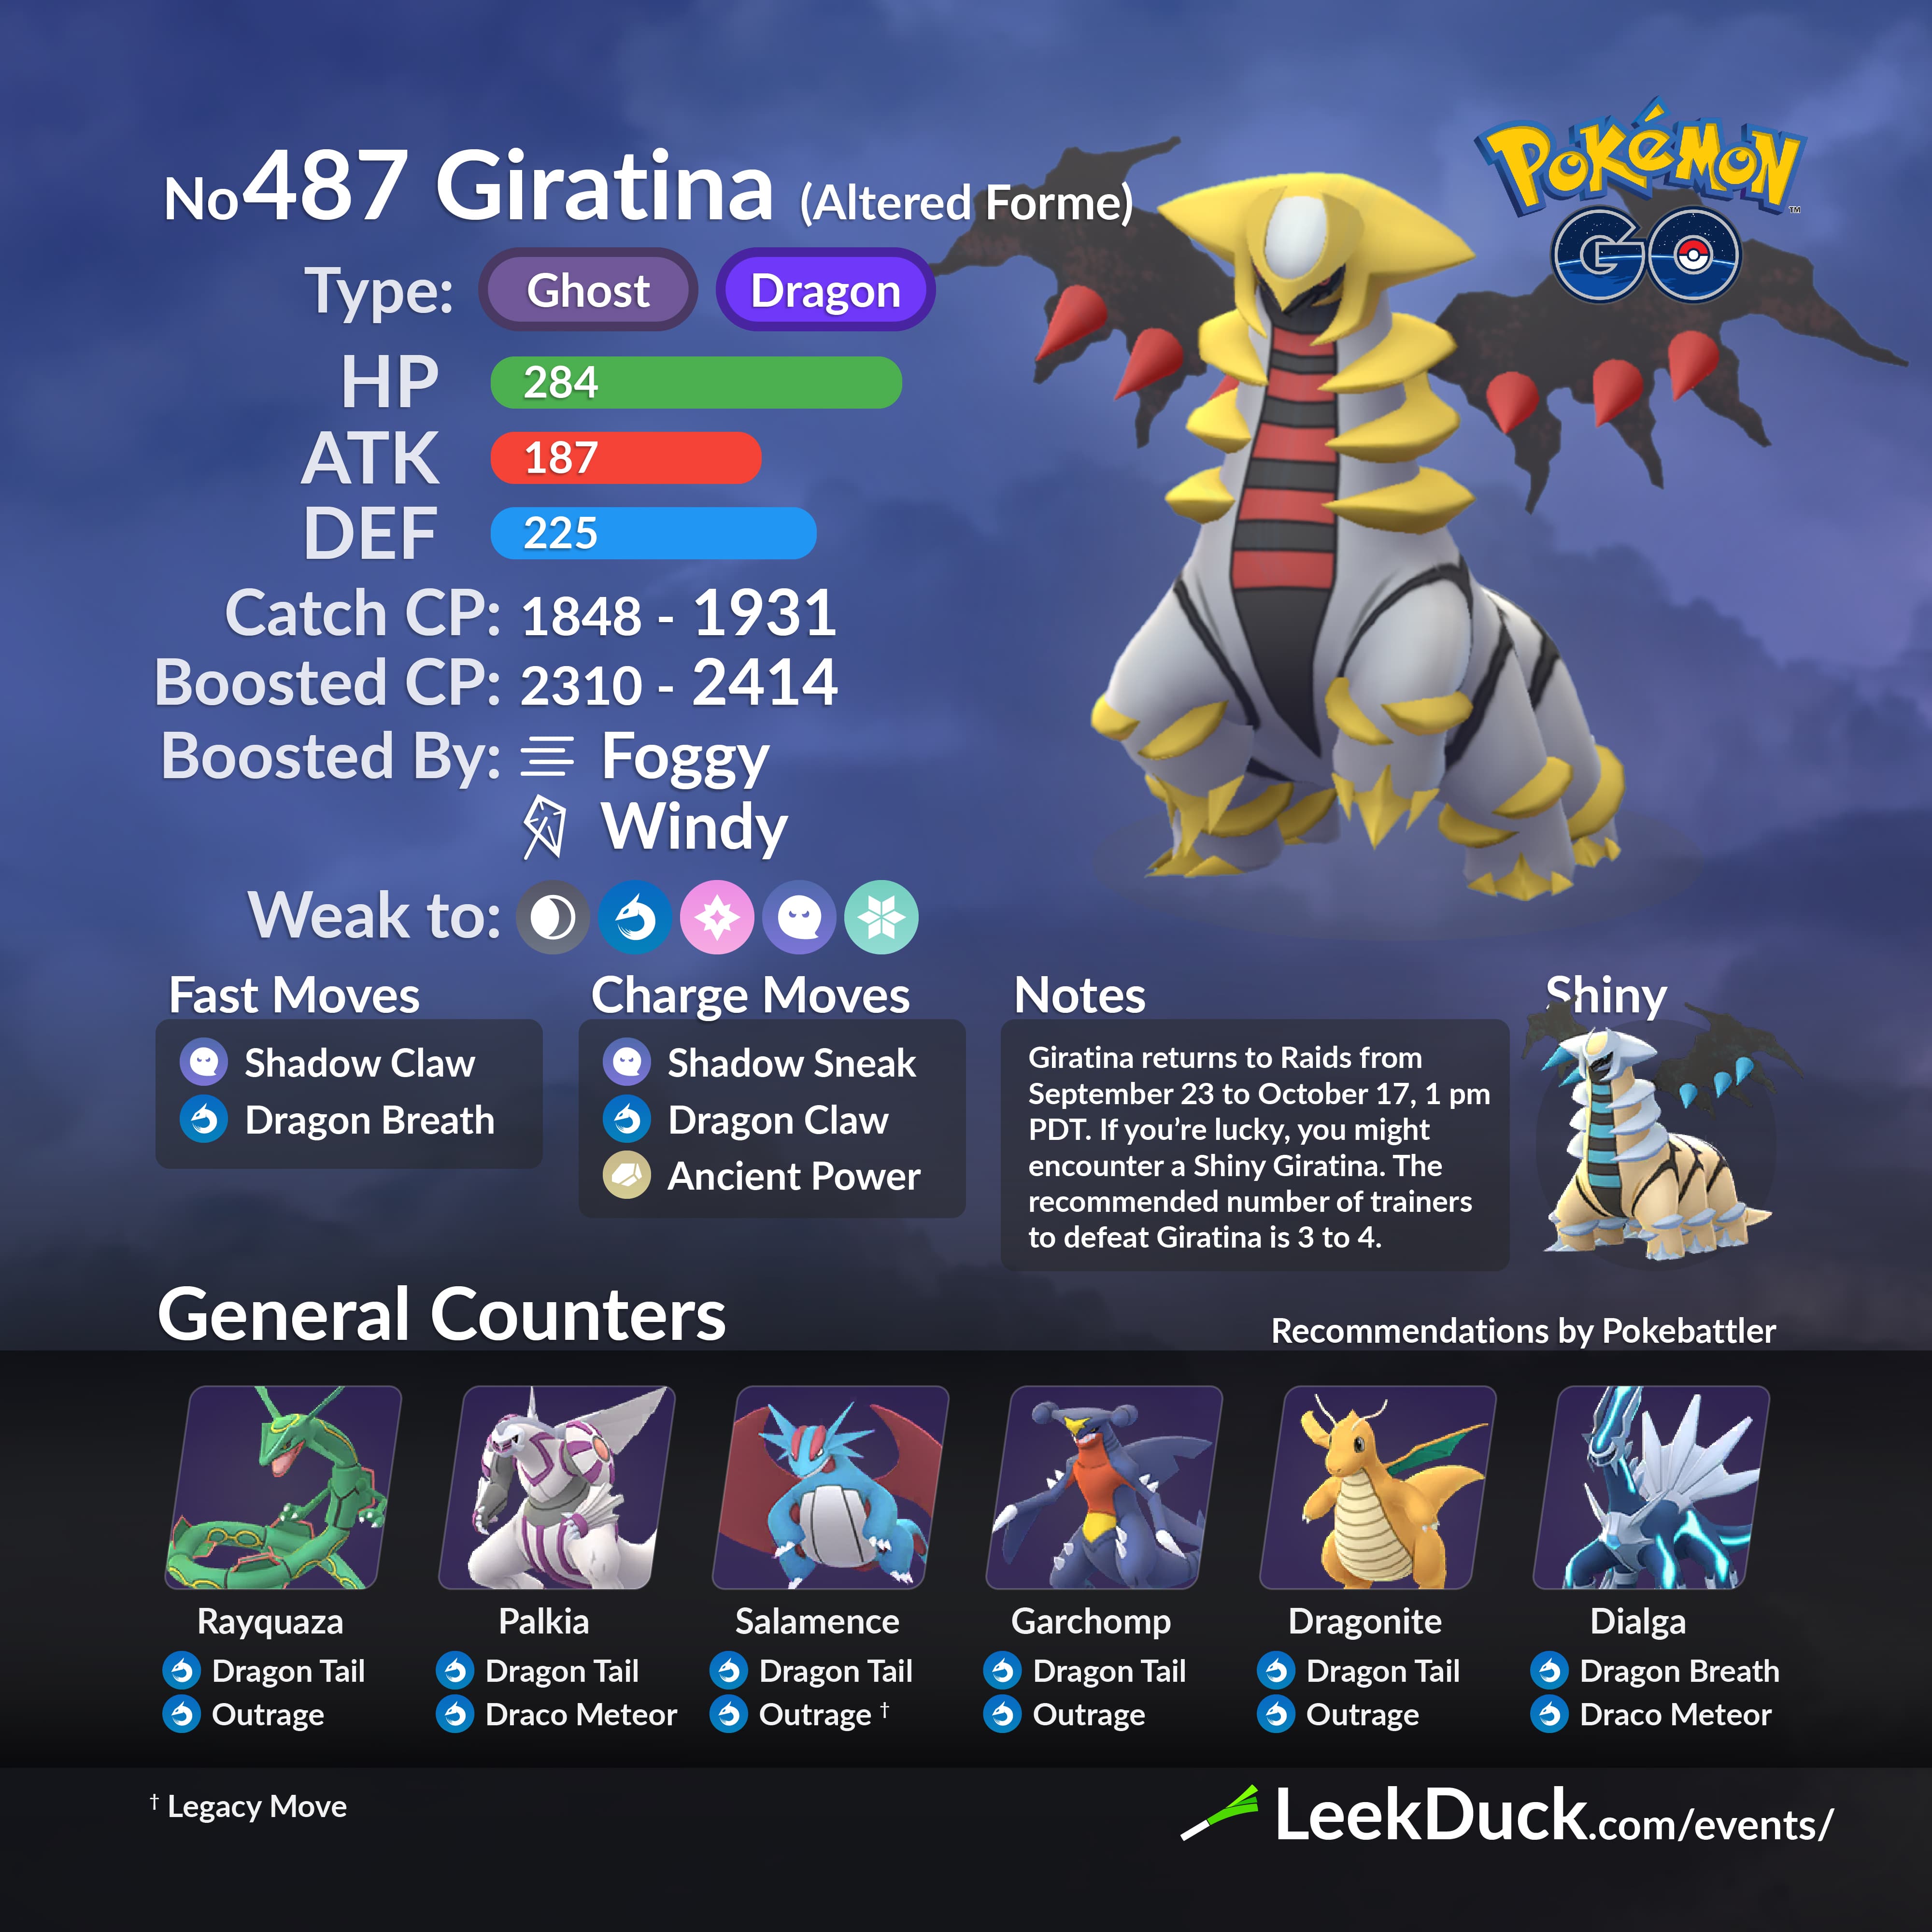 Shiny Giratina Origin Form Pokemon Trade Go LV20 Registered / 30 Day  Pokémon